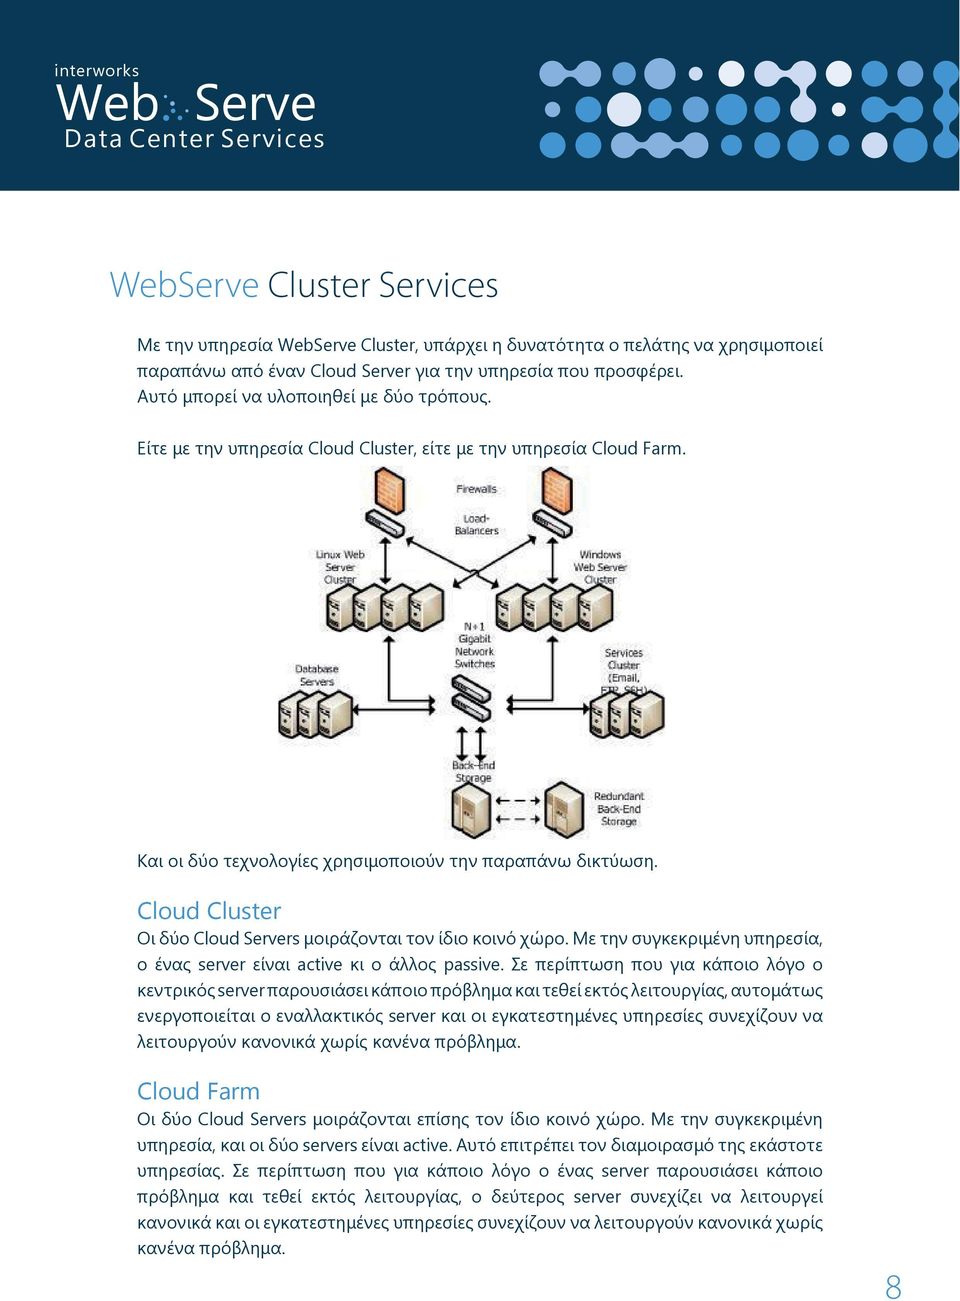 Cloud Cluster Οι δύο Cloud Servers μοιράζονται τον ίδιο κοινό χώρο. Με την συγκεκριμένη υπηρεσία, ο ένας server είναι active κι ο άλλος passive.